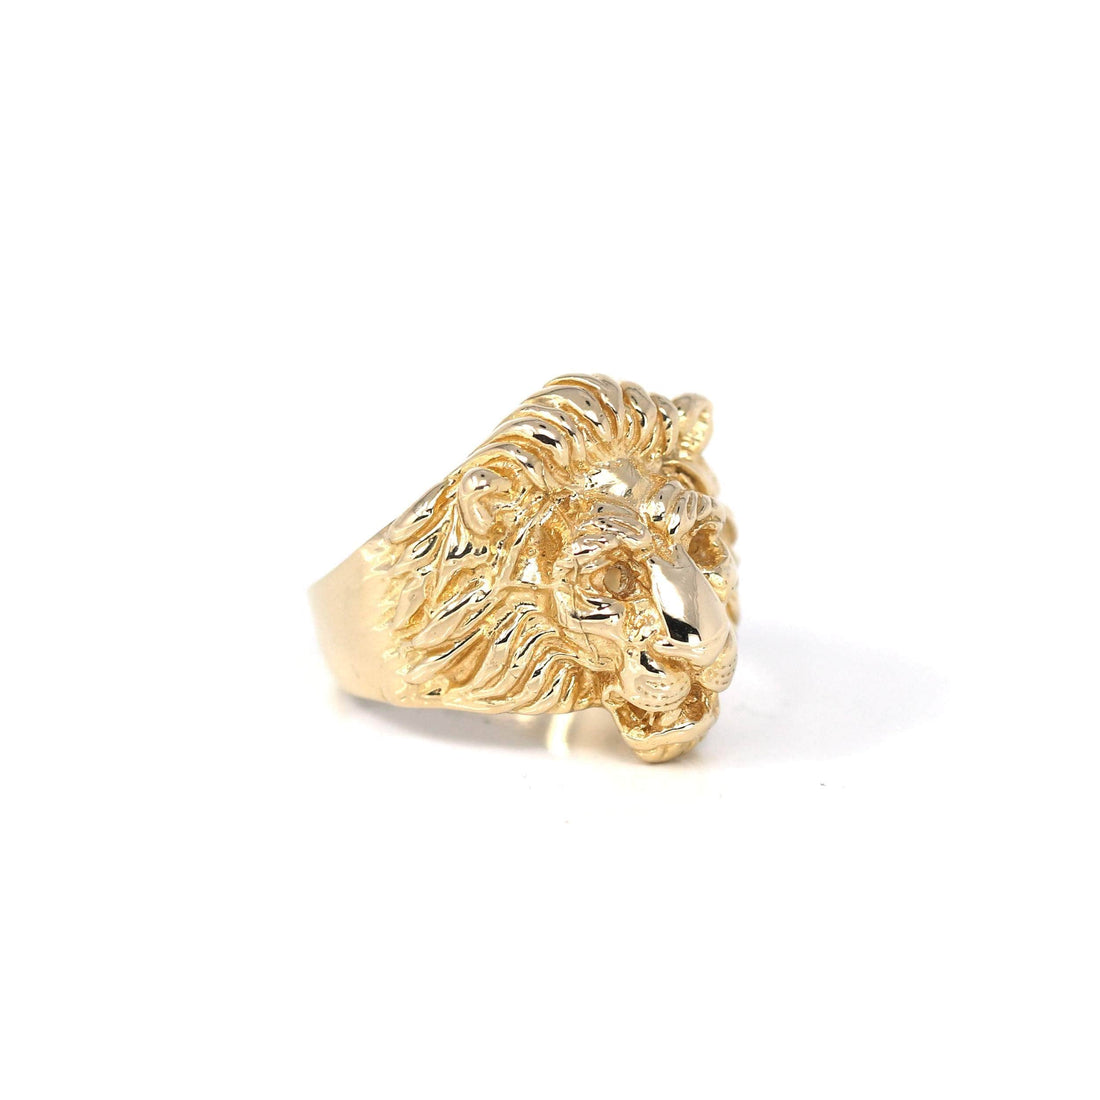 Baikalla Jewelry Gold Diamond Men's Ring 8.5 14k Solid Yellow Gold Nugget Men's Lion Band Ring